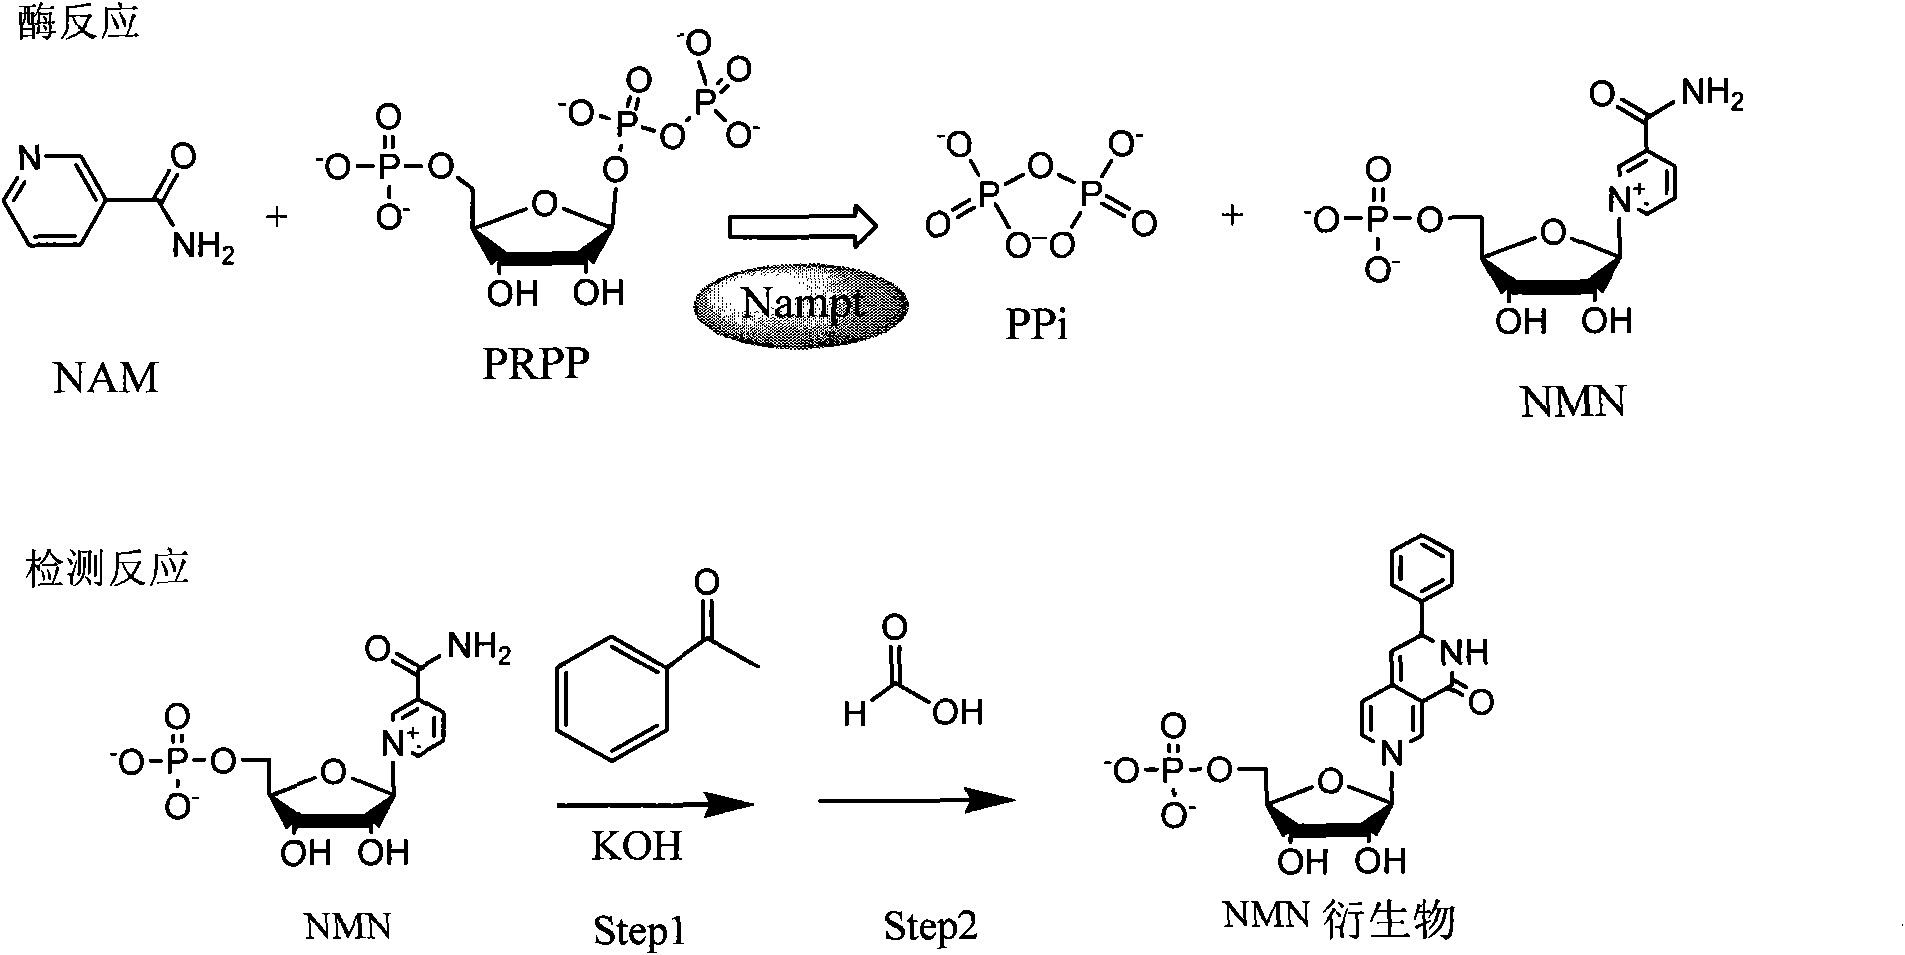 Method and kit for determining nicotinamide phosphoribosyl transferase (Nampt) activity